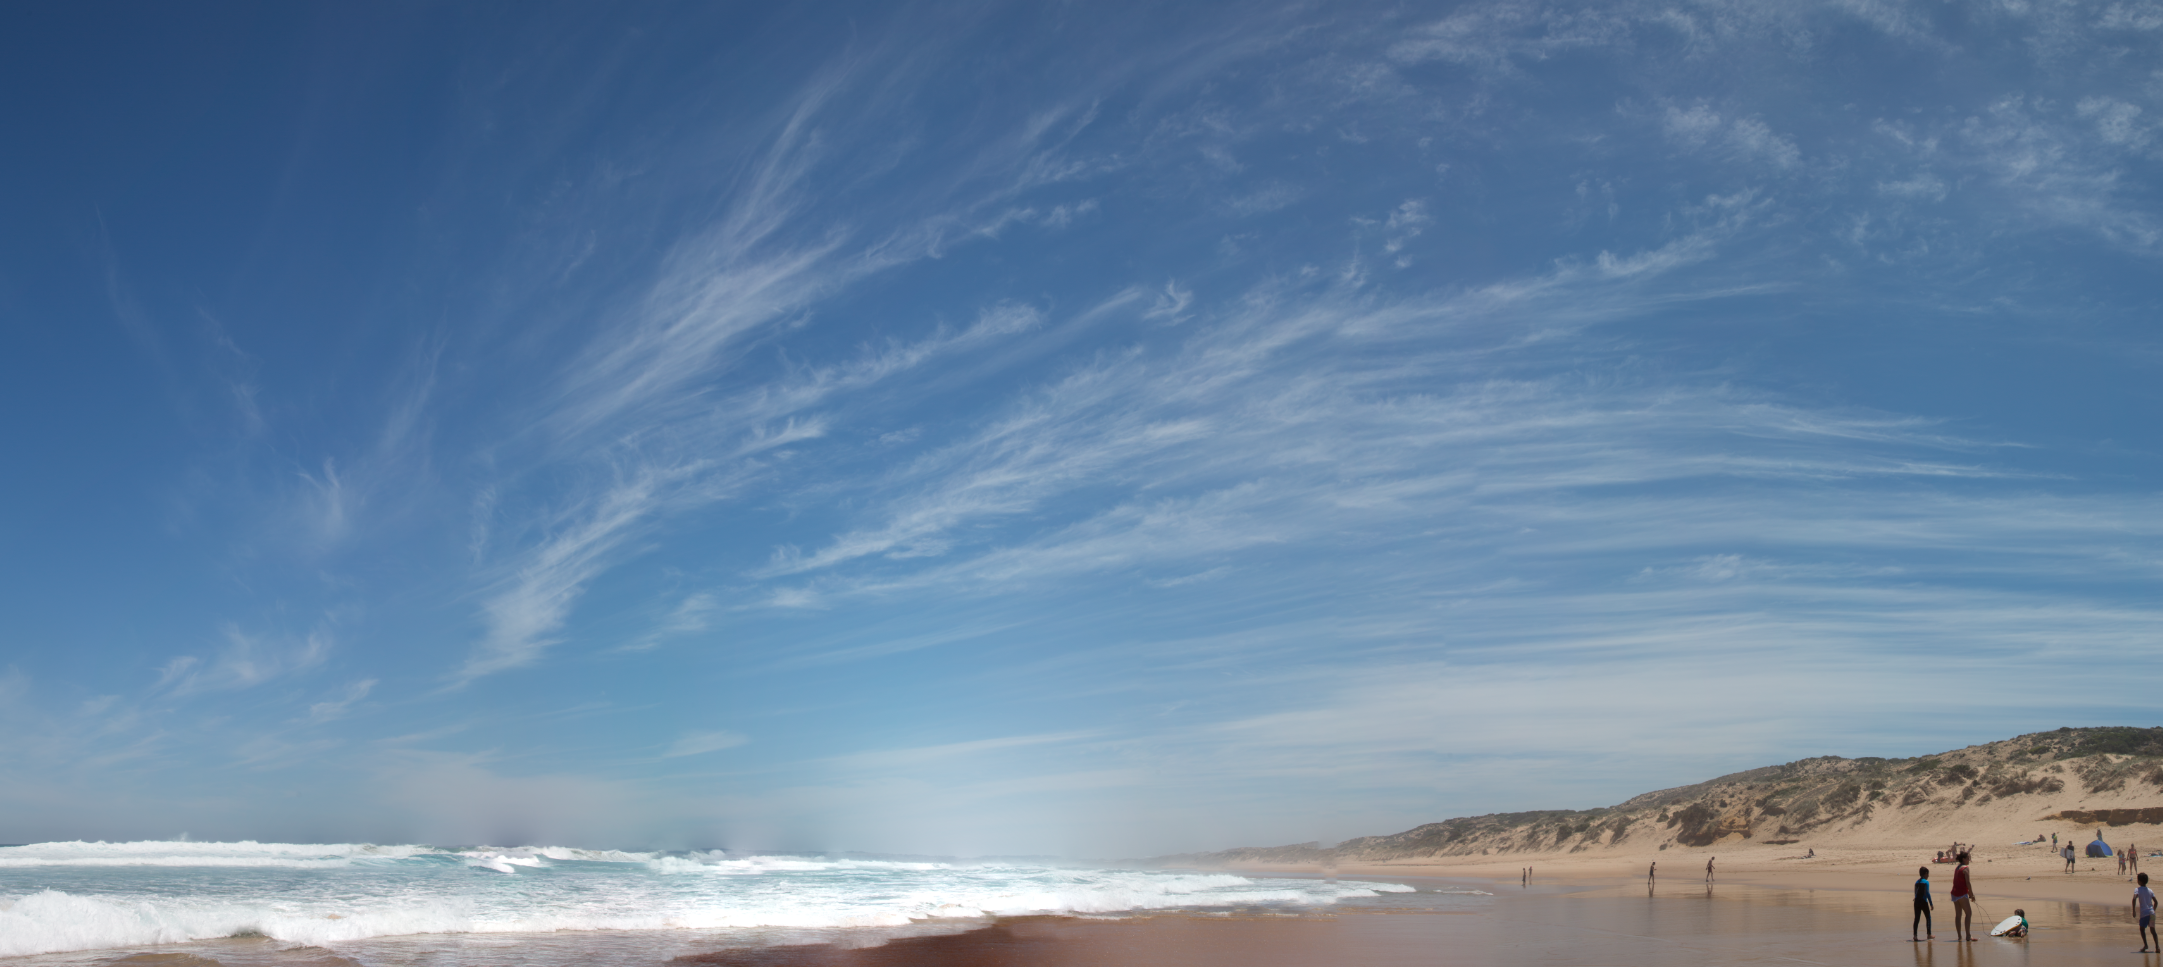 Growling Sea, Big Sky - Woolamai, Phillip Island - Victoria